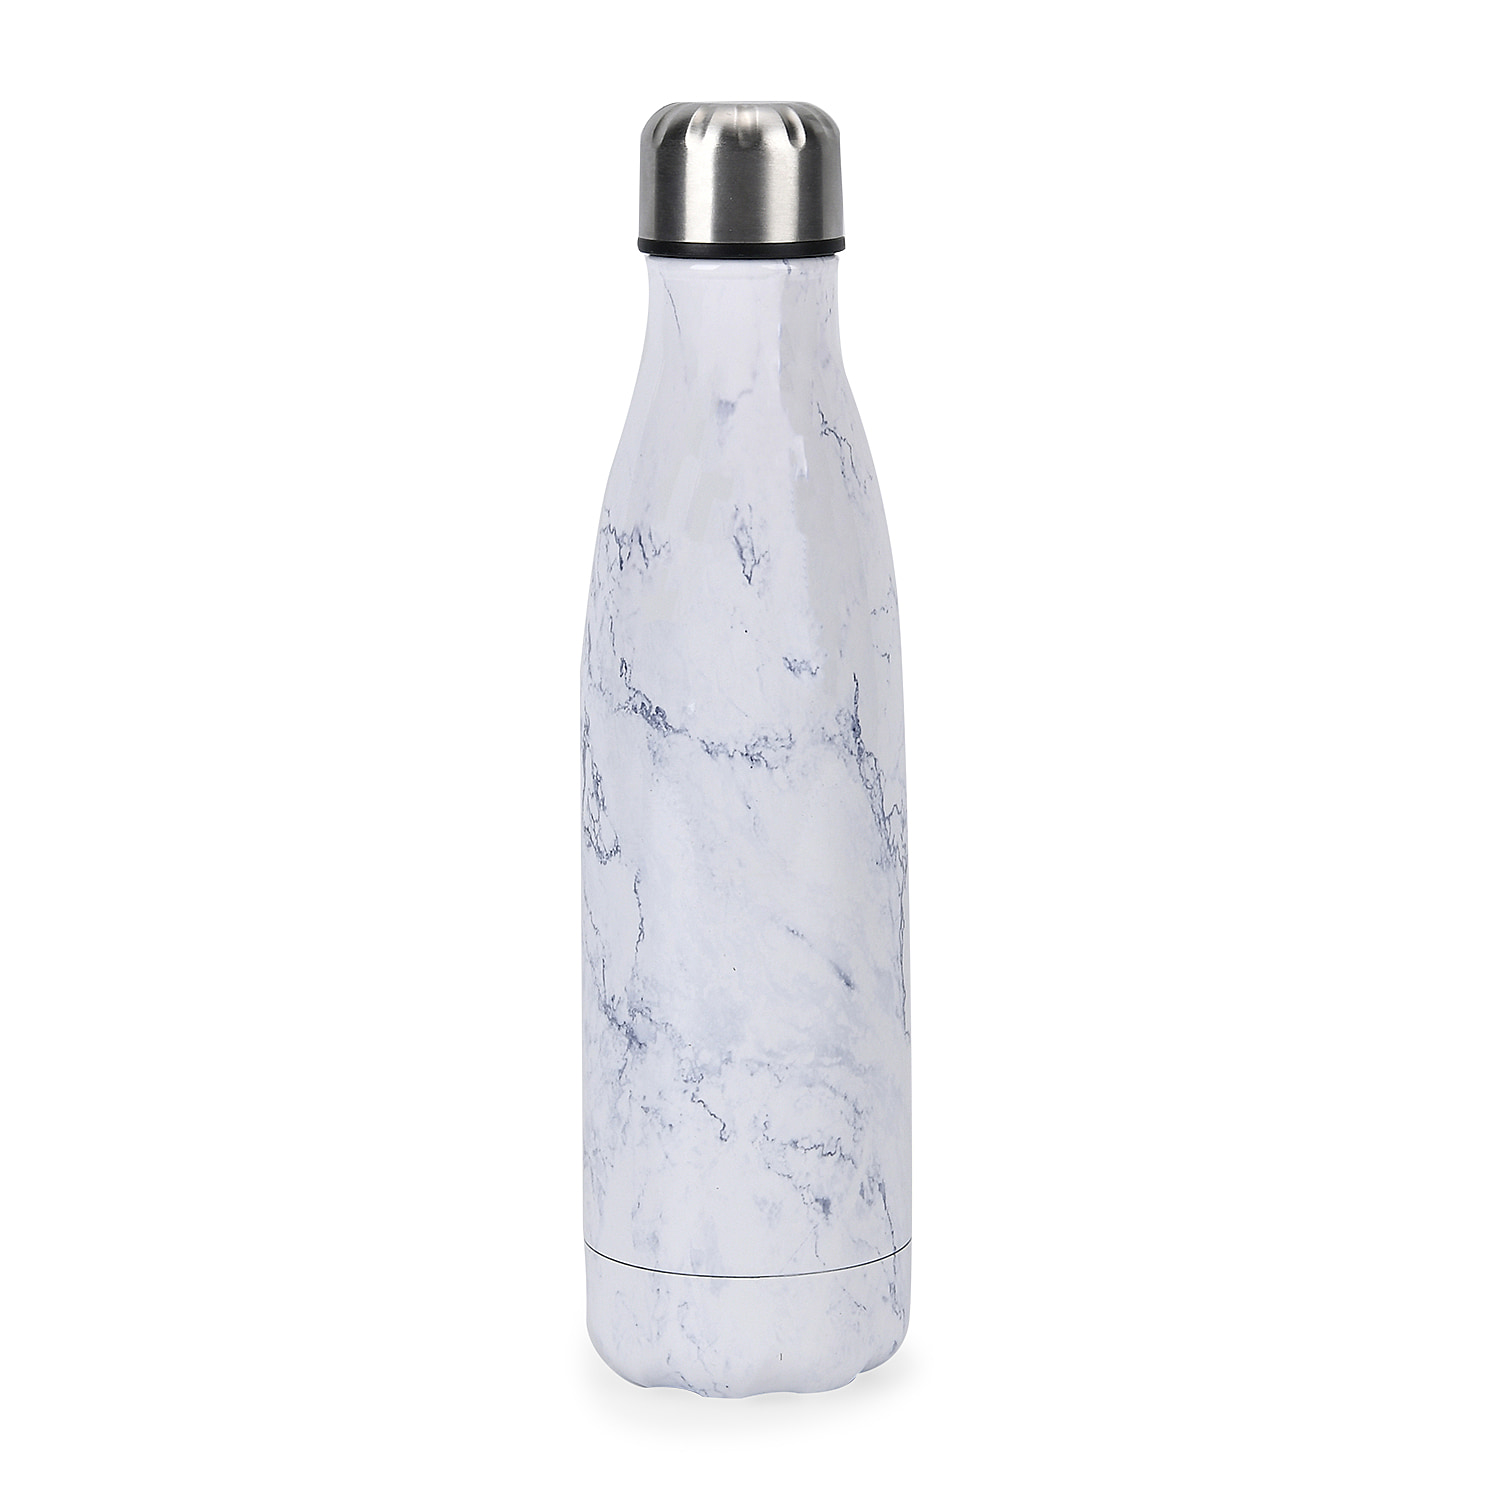 Stainless Steel Drinking Water Bottle for School, Sports, Running, Gym 500ml - White